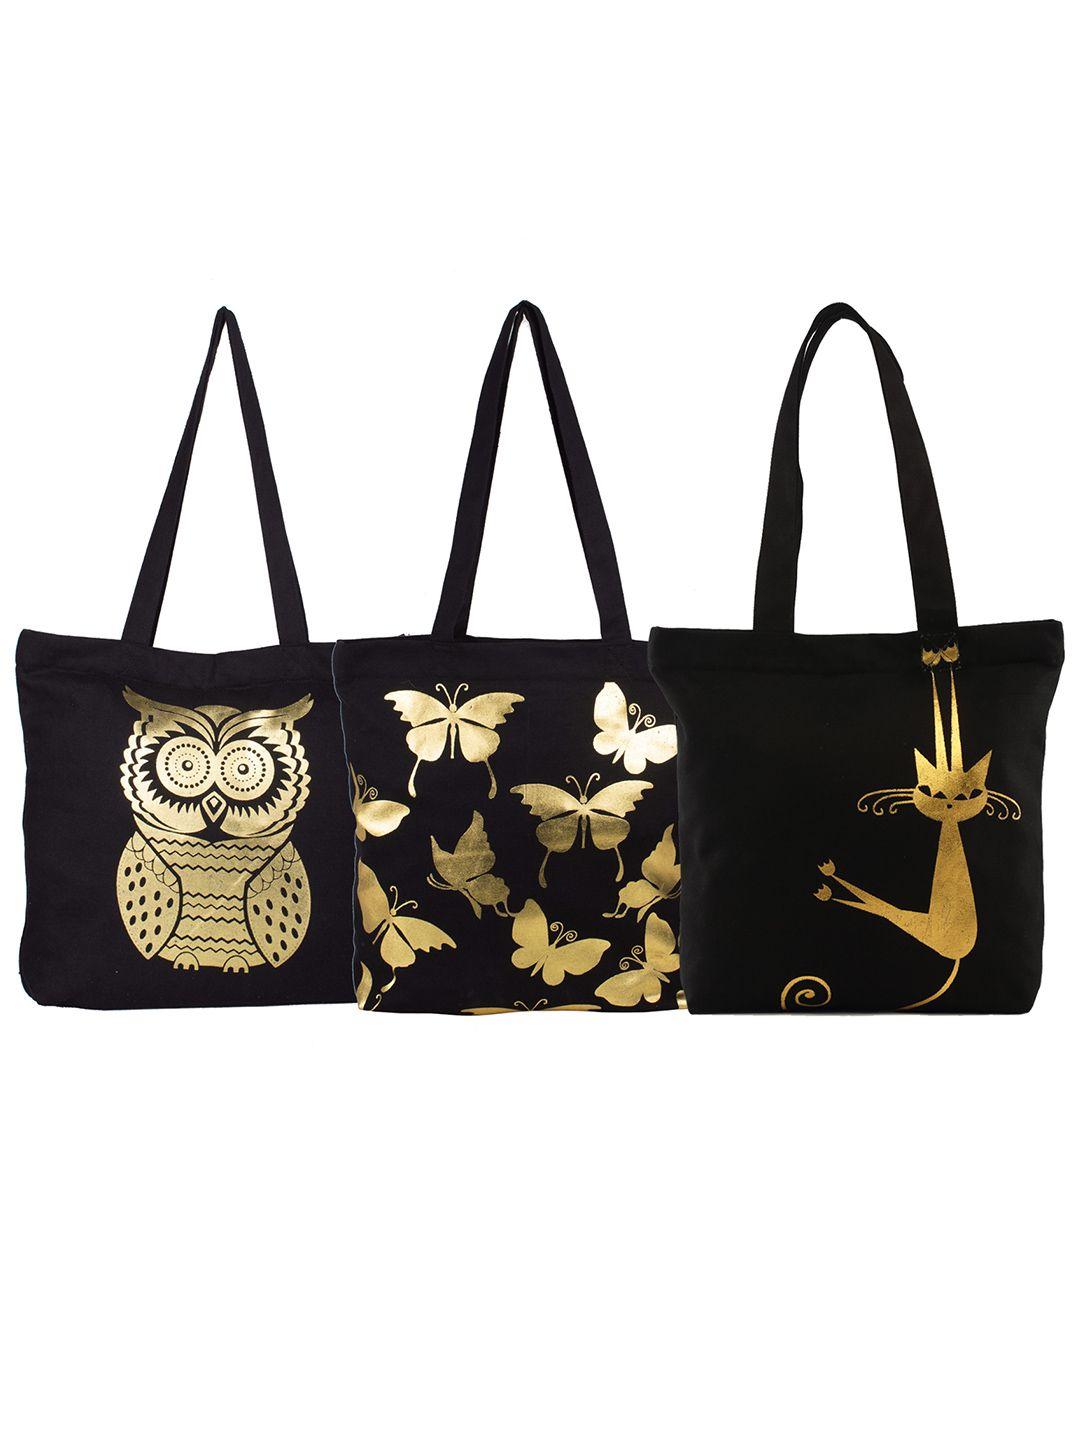 vivinkaa set of 3 black & gold-toned printed tote bags